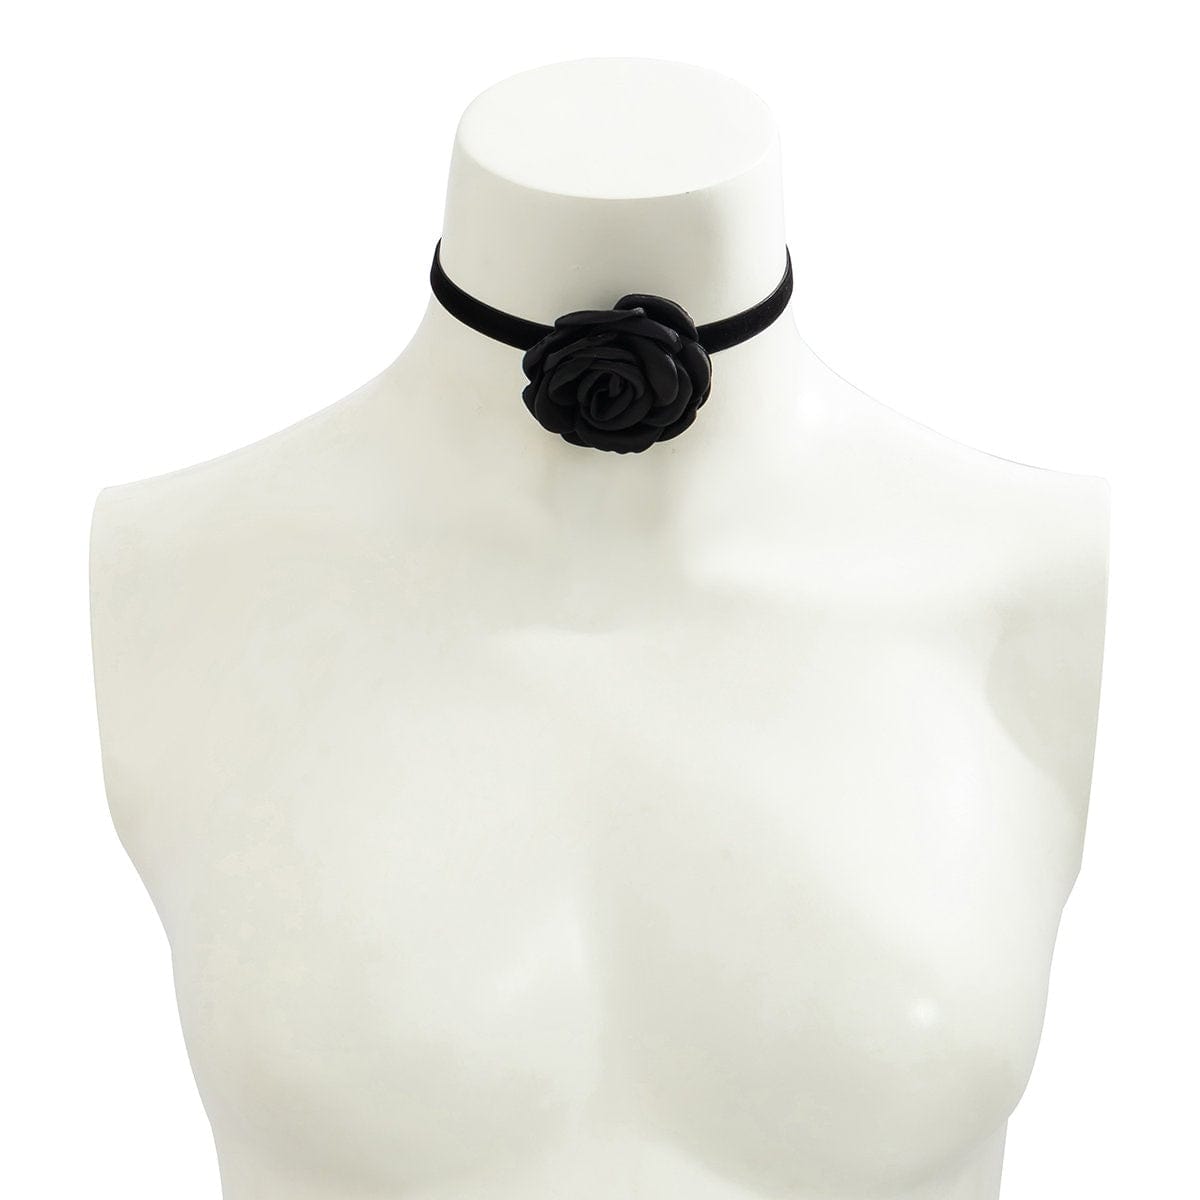 TUCEWP Flower Choker for Women Long Ribbon Choker White Black Flower  Necklace Tie Collar Choker Adjustable Rose Necklace